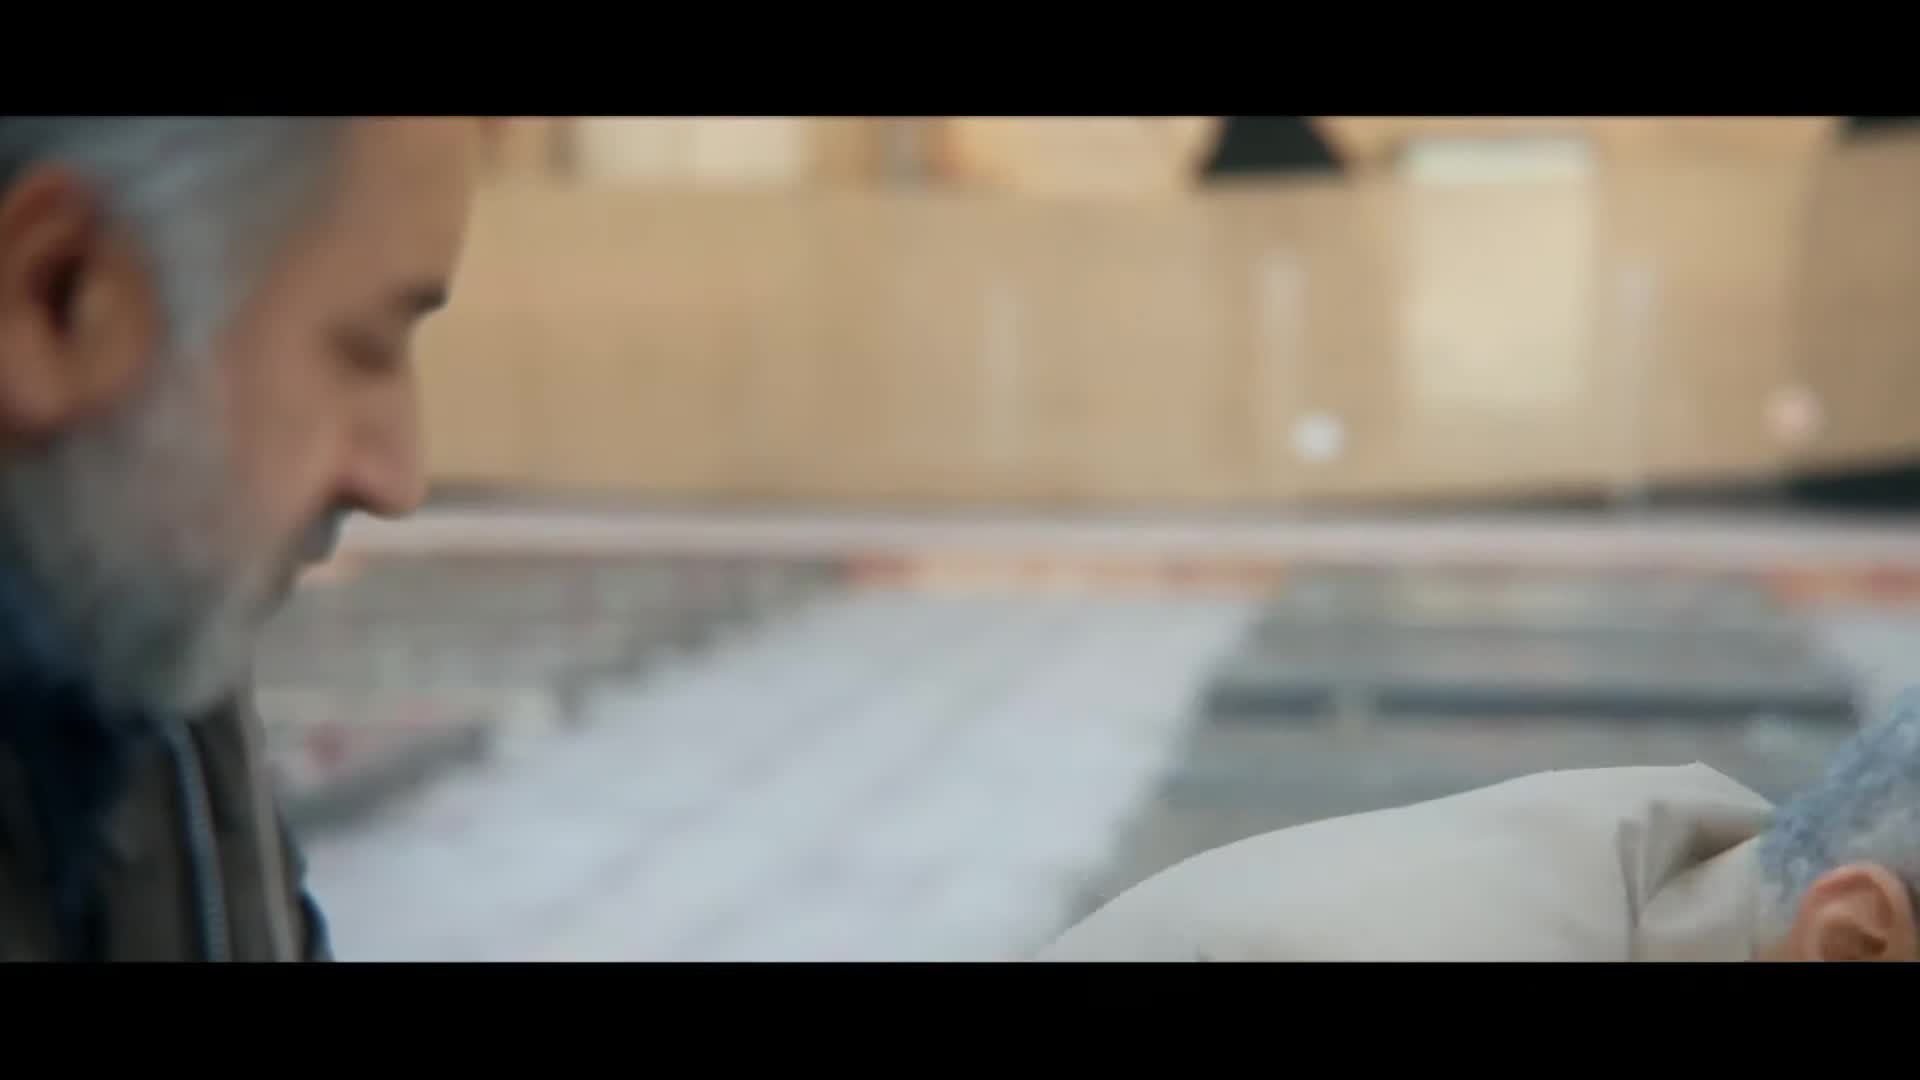 [Short Film 2] Shaheed Soleimani | Aik Balisht Jagha | مختصر فلم] ایک بالشت جگہ] | Urdu